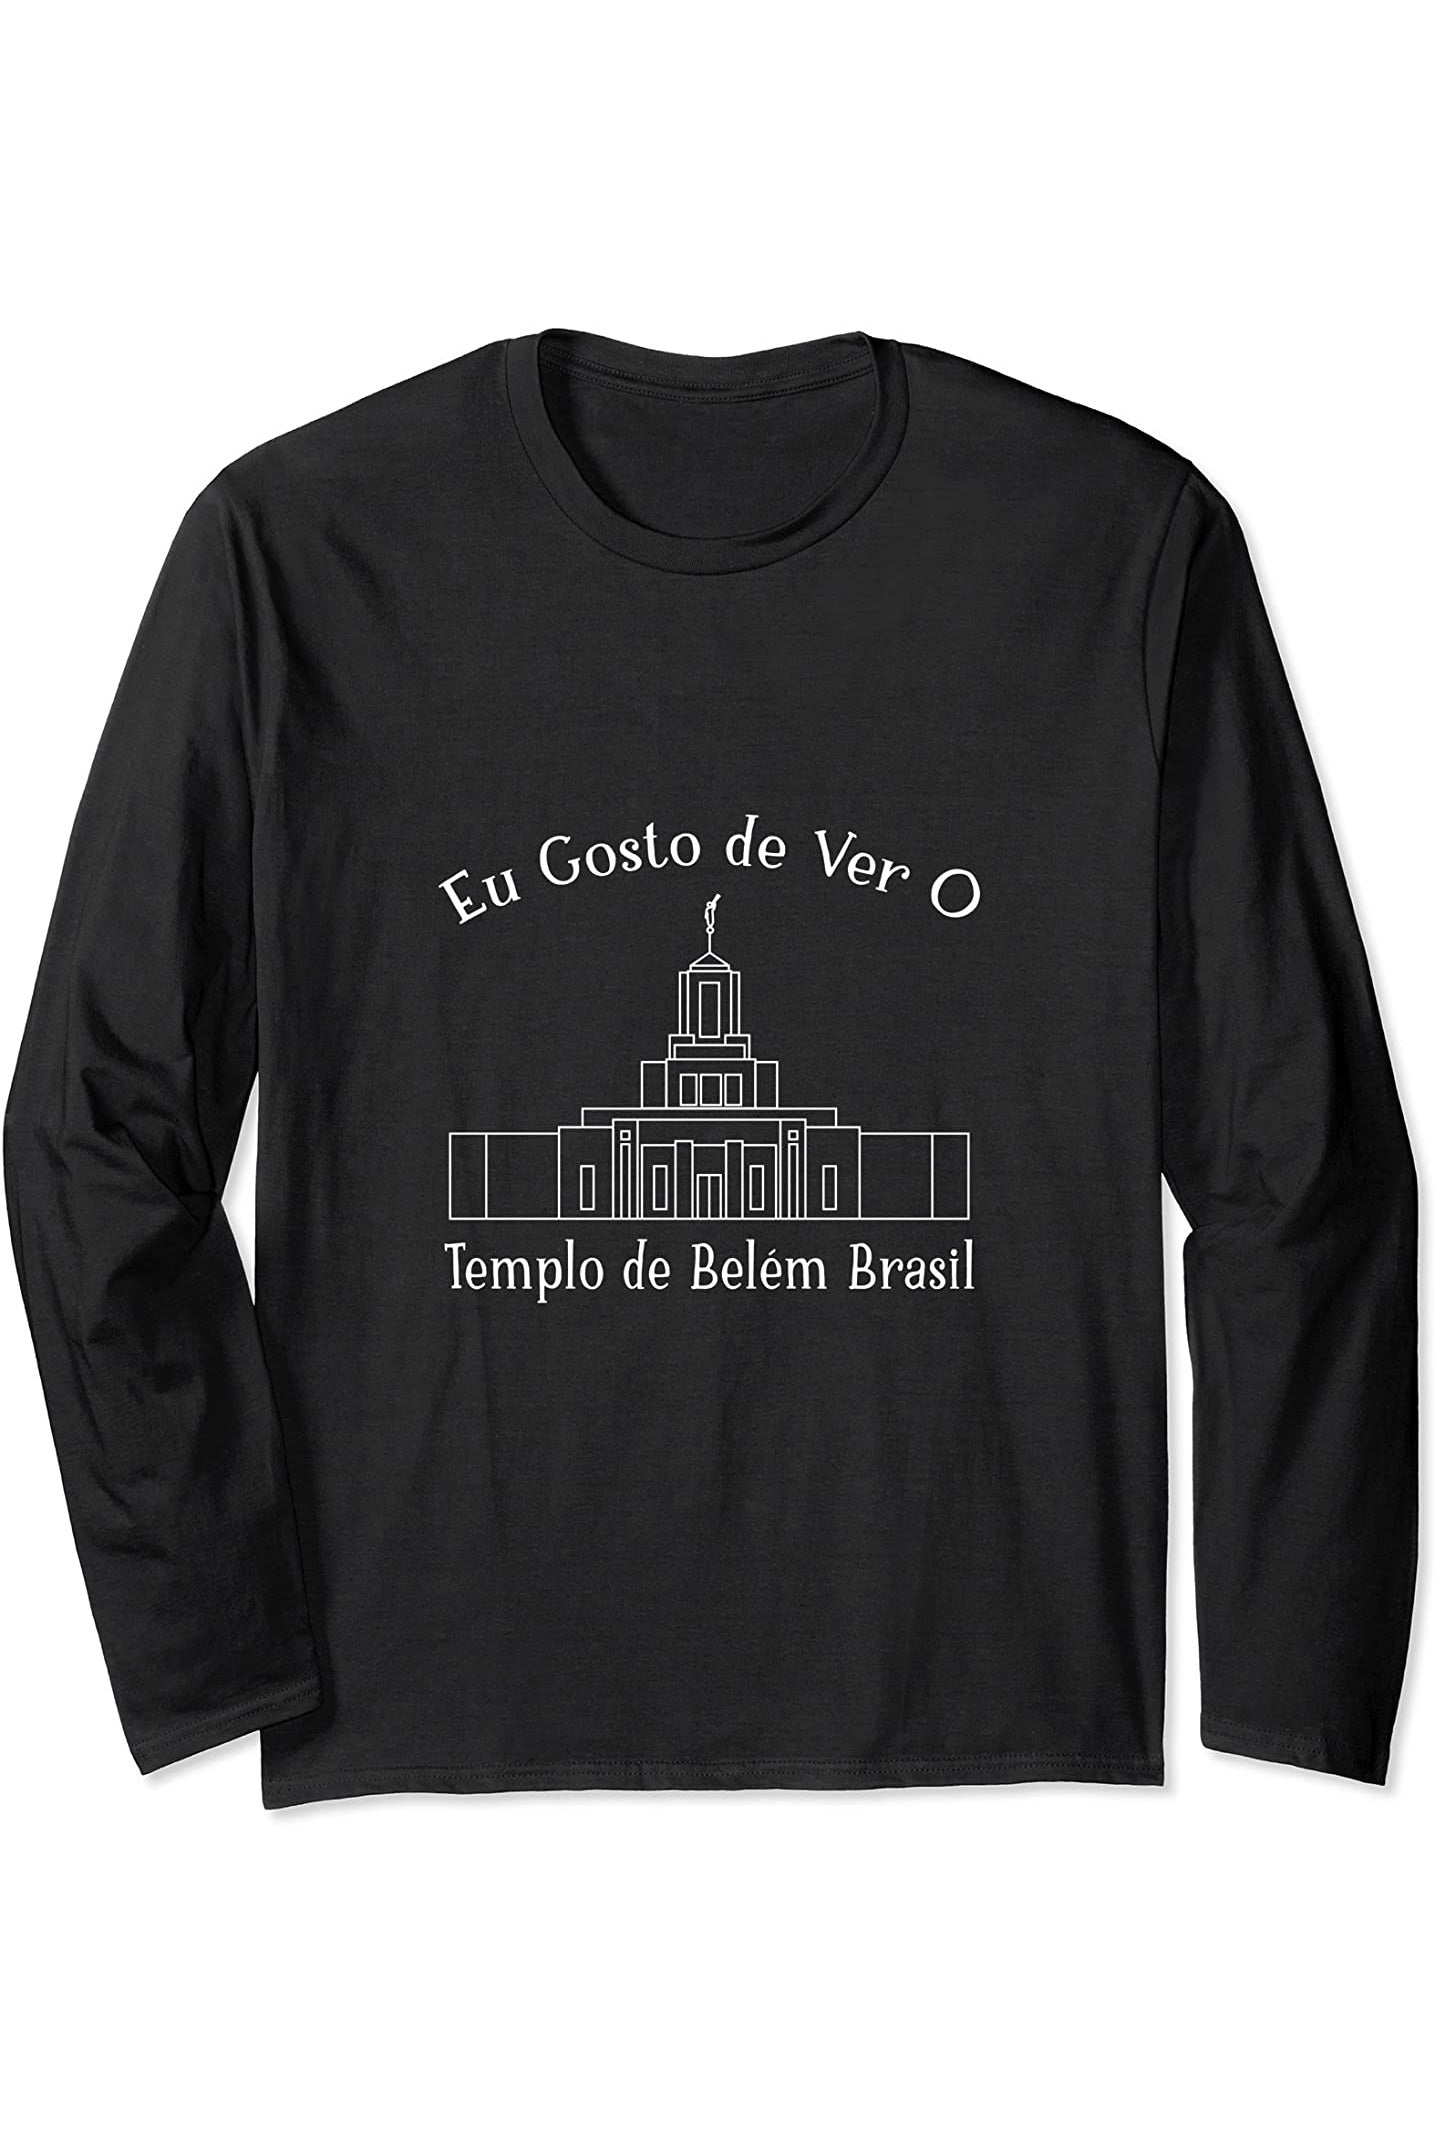 Belem Brazil Temple Long Sleeve T-Shirt - Happy Style (Portuguese) US